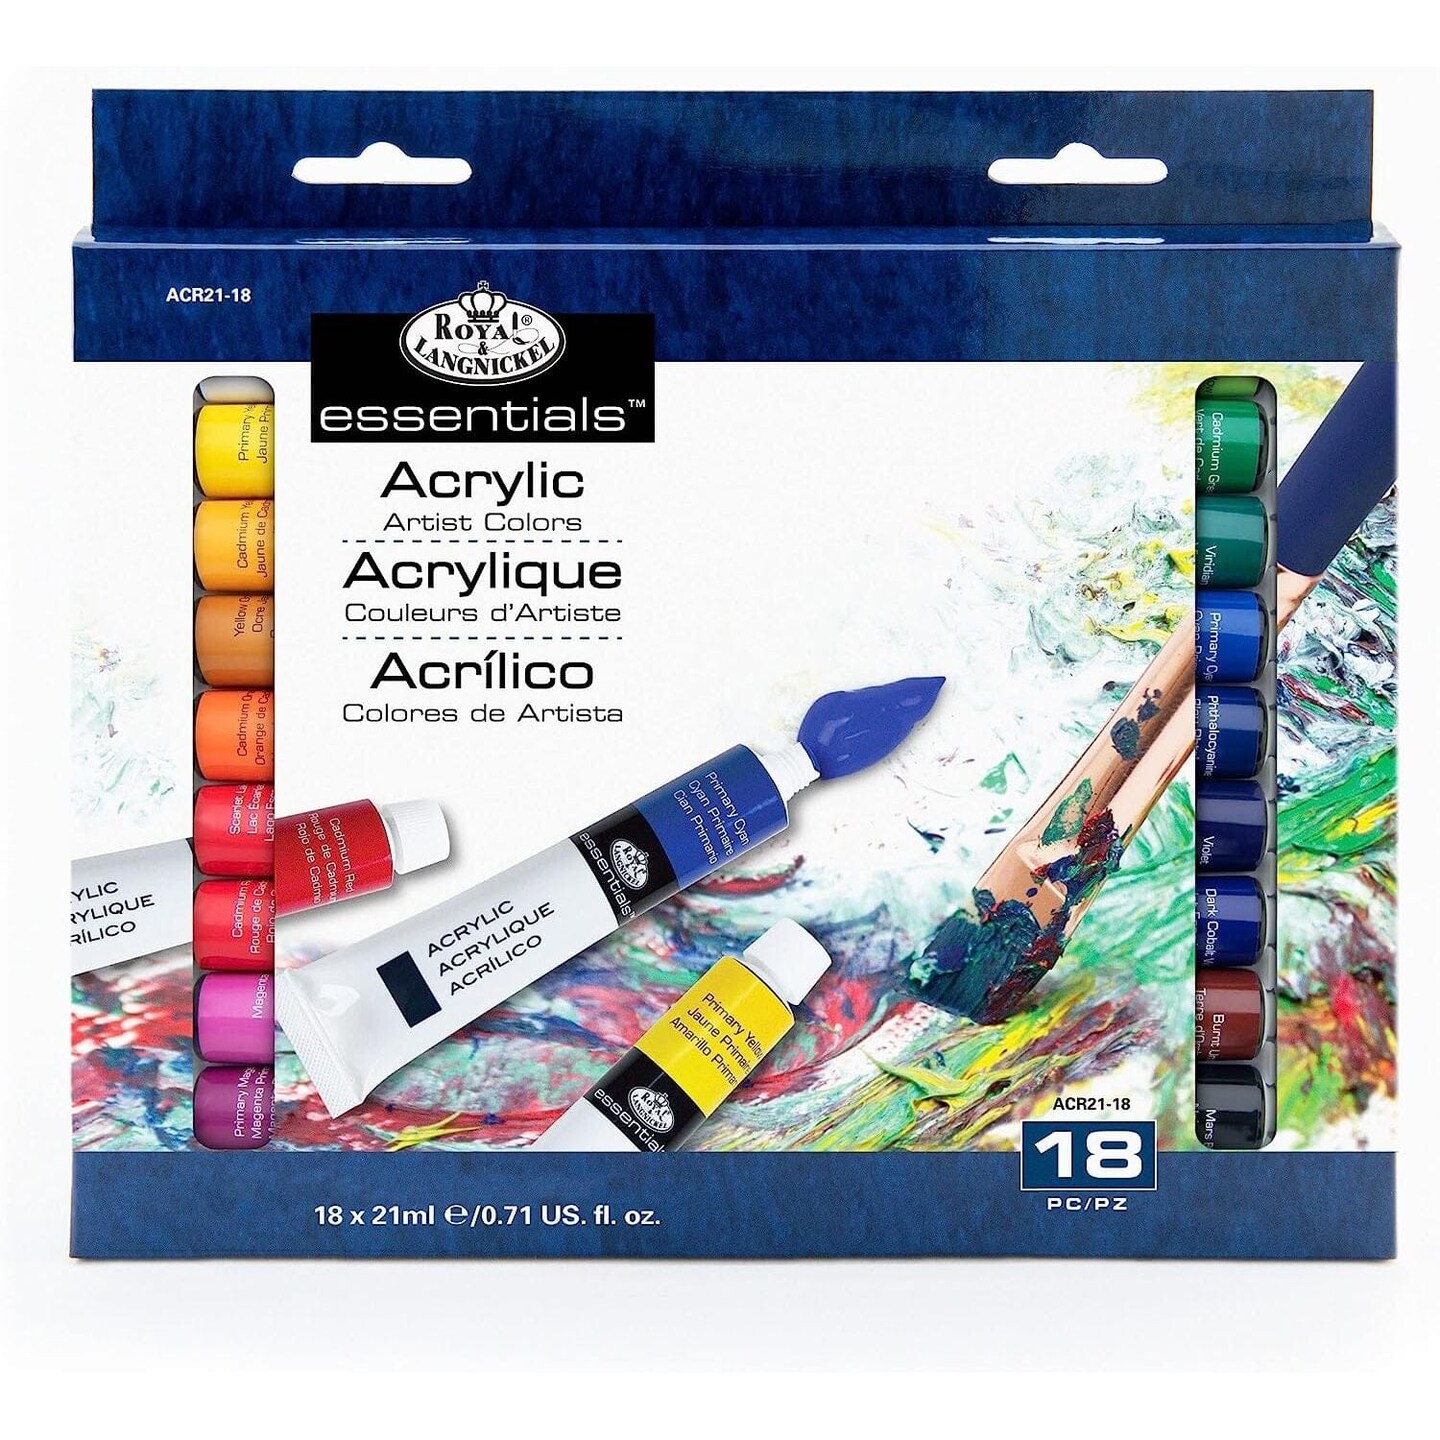  Royal & Langnickel Essentials Acrylic Tube Paint